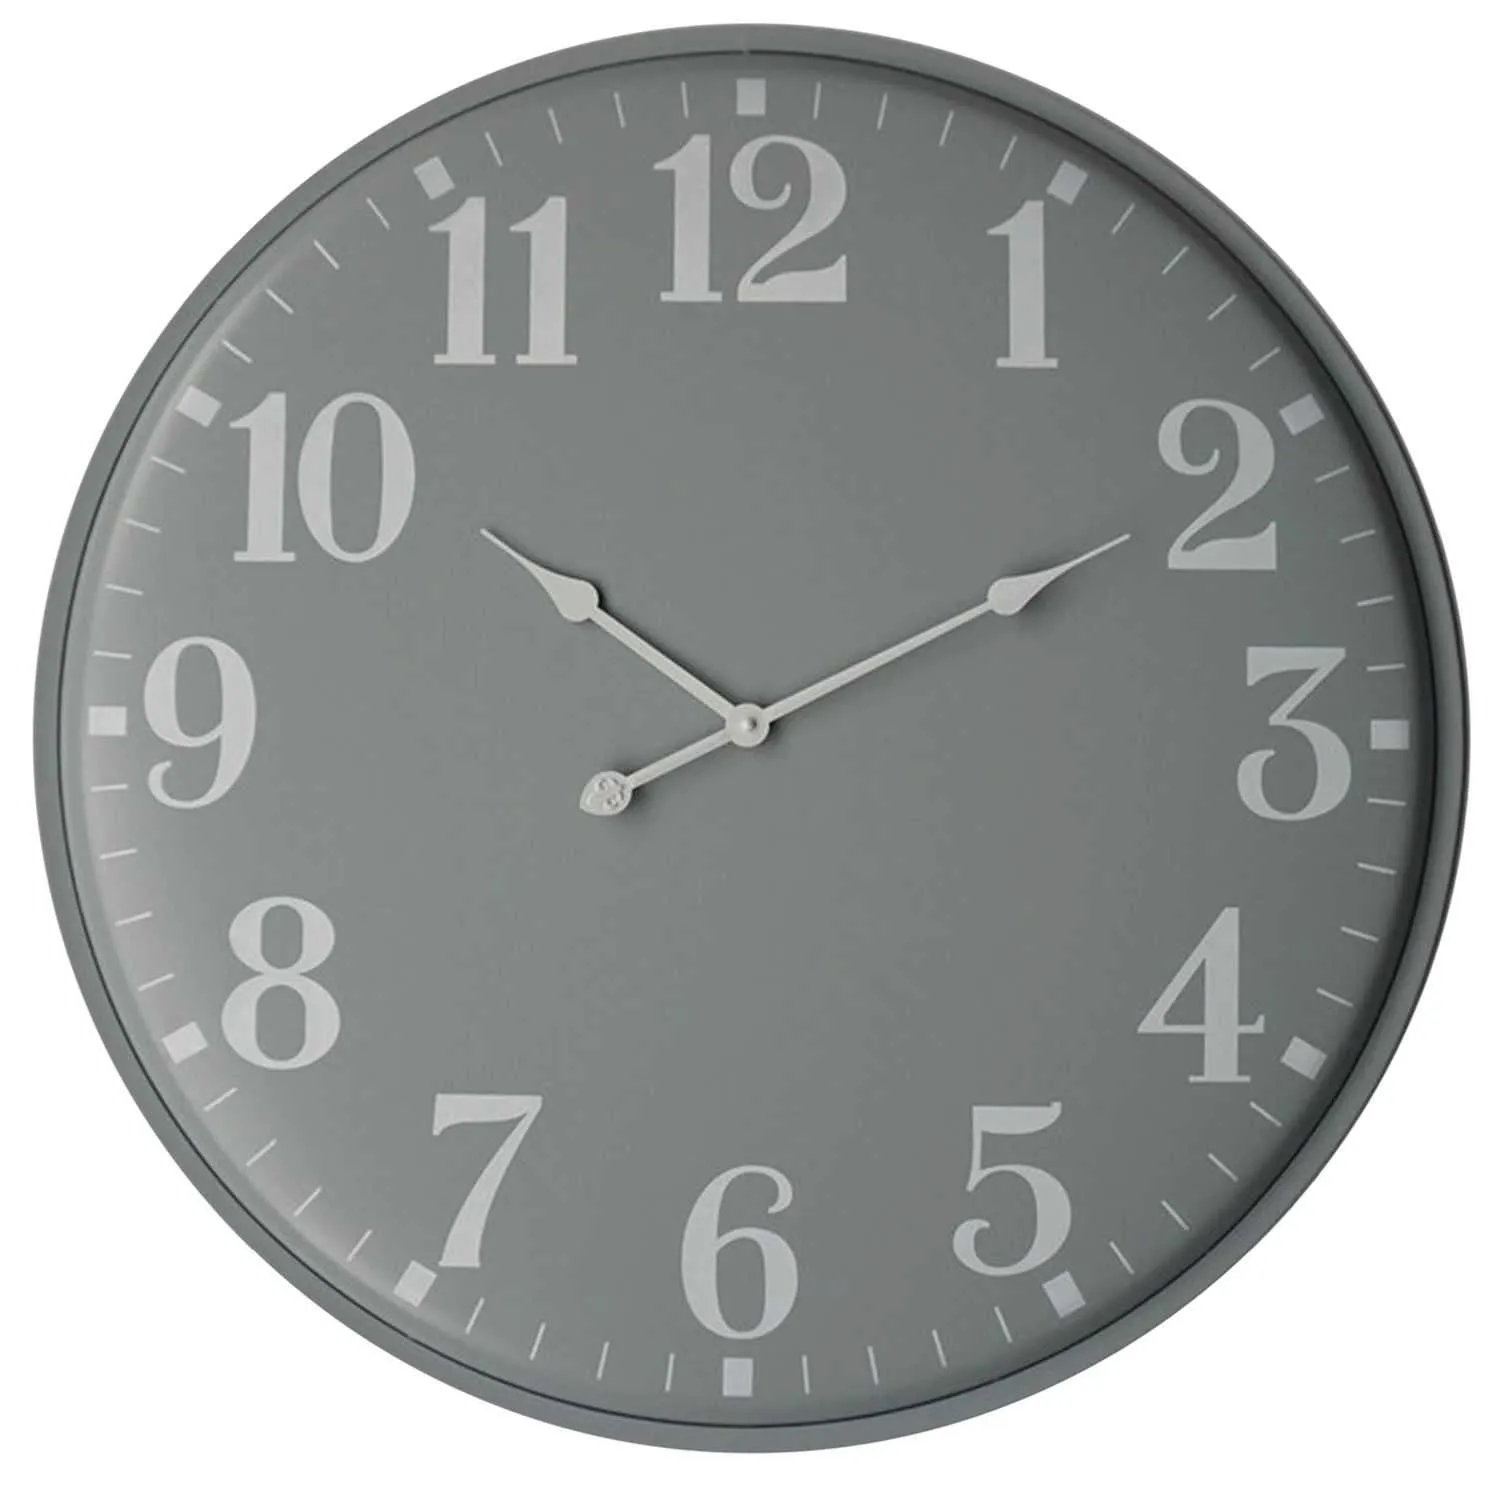 Ashmount Large Wall Clock